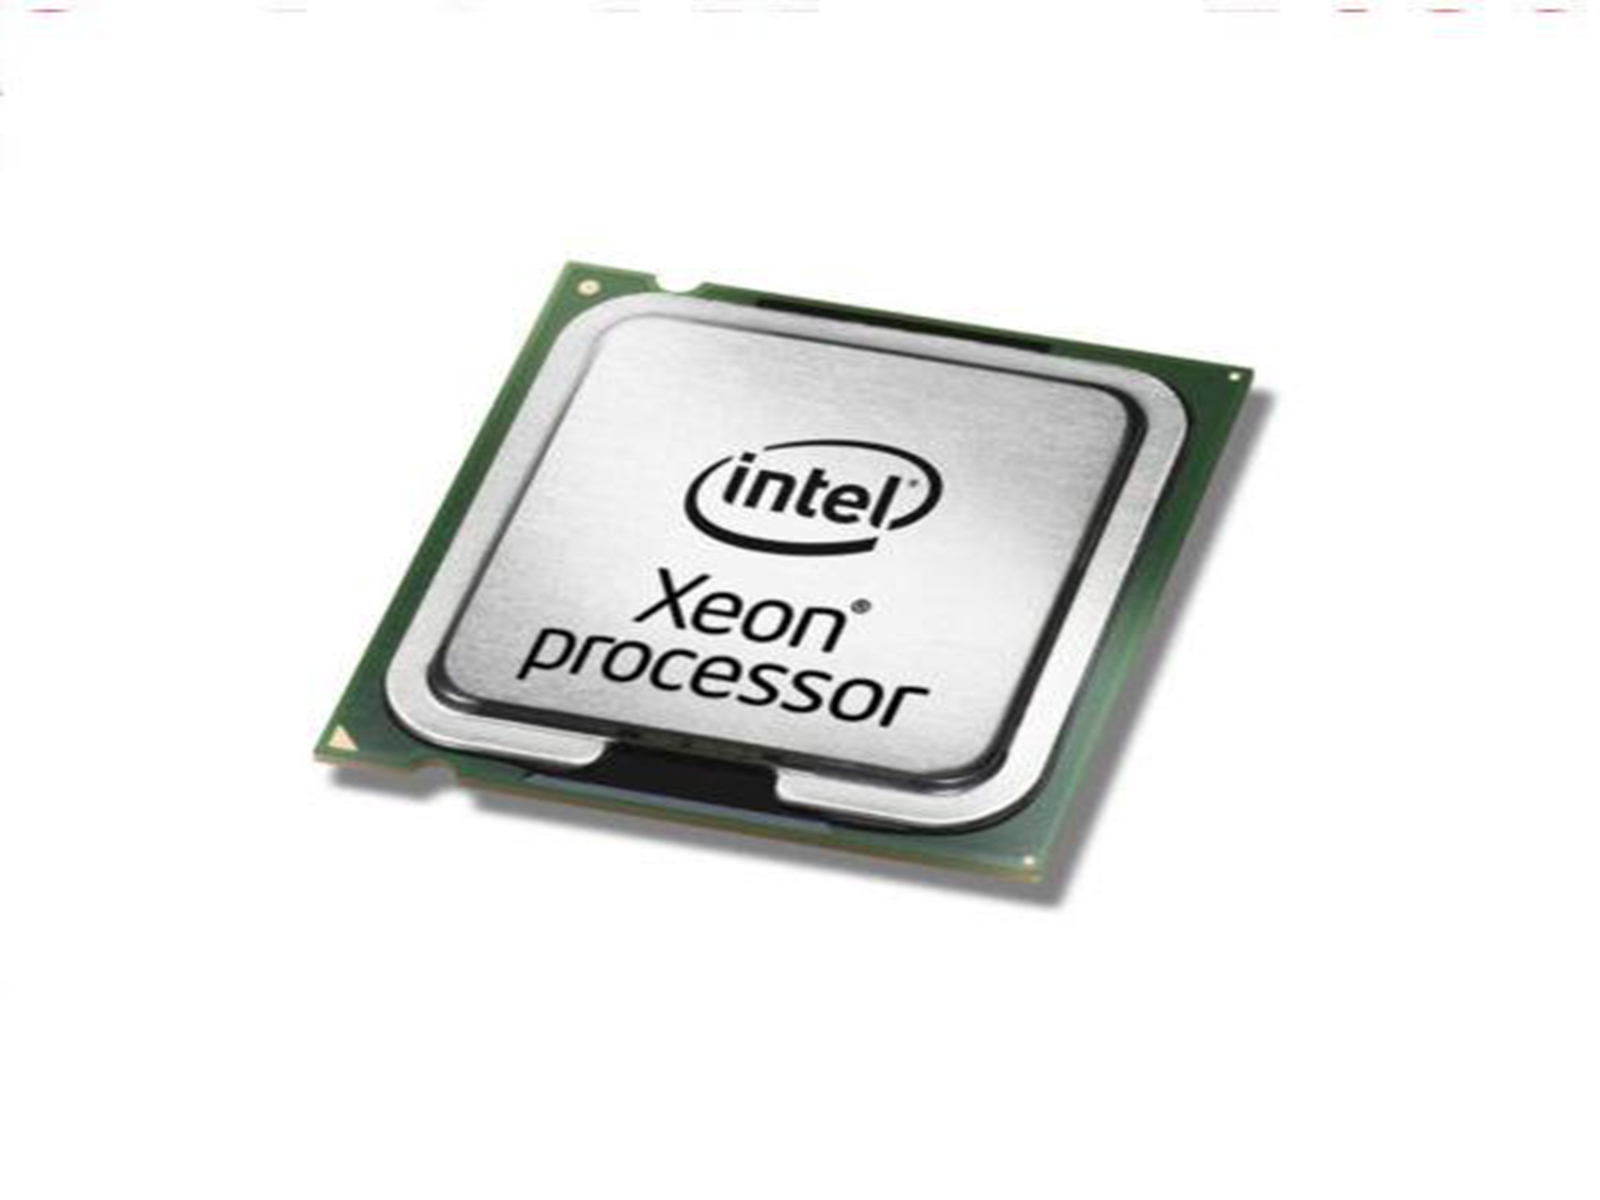 Intel Xeon E5320 cpu